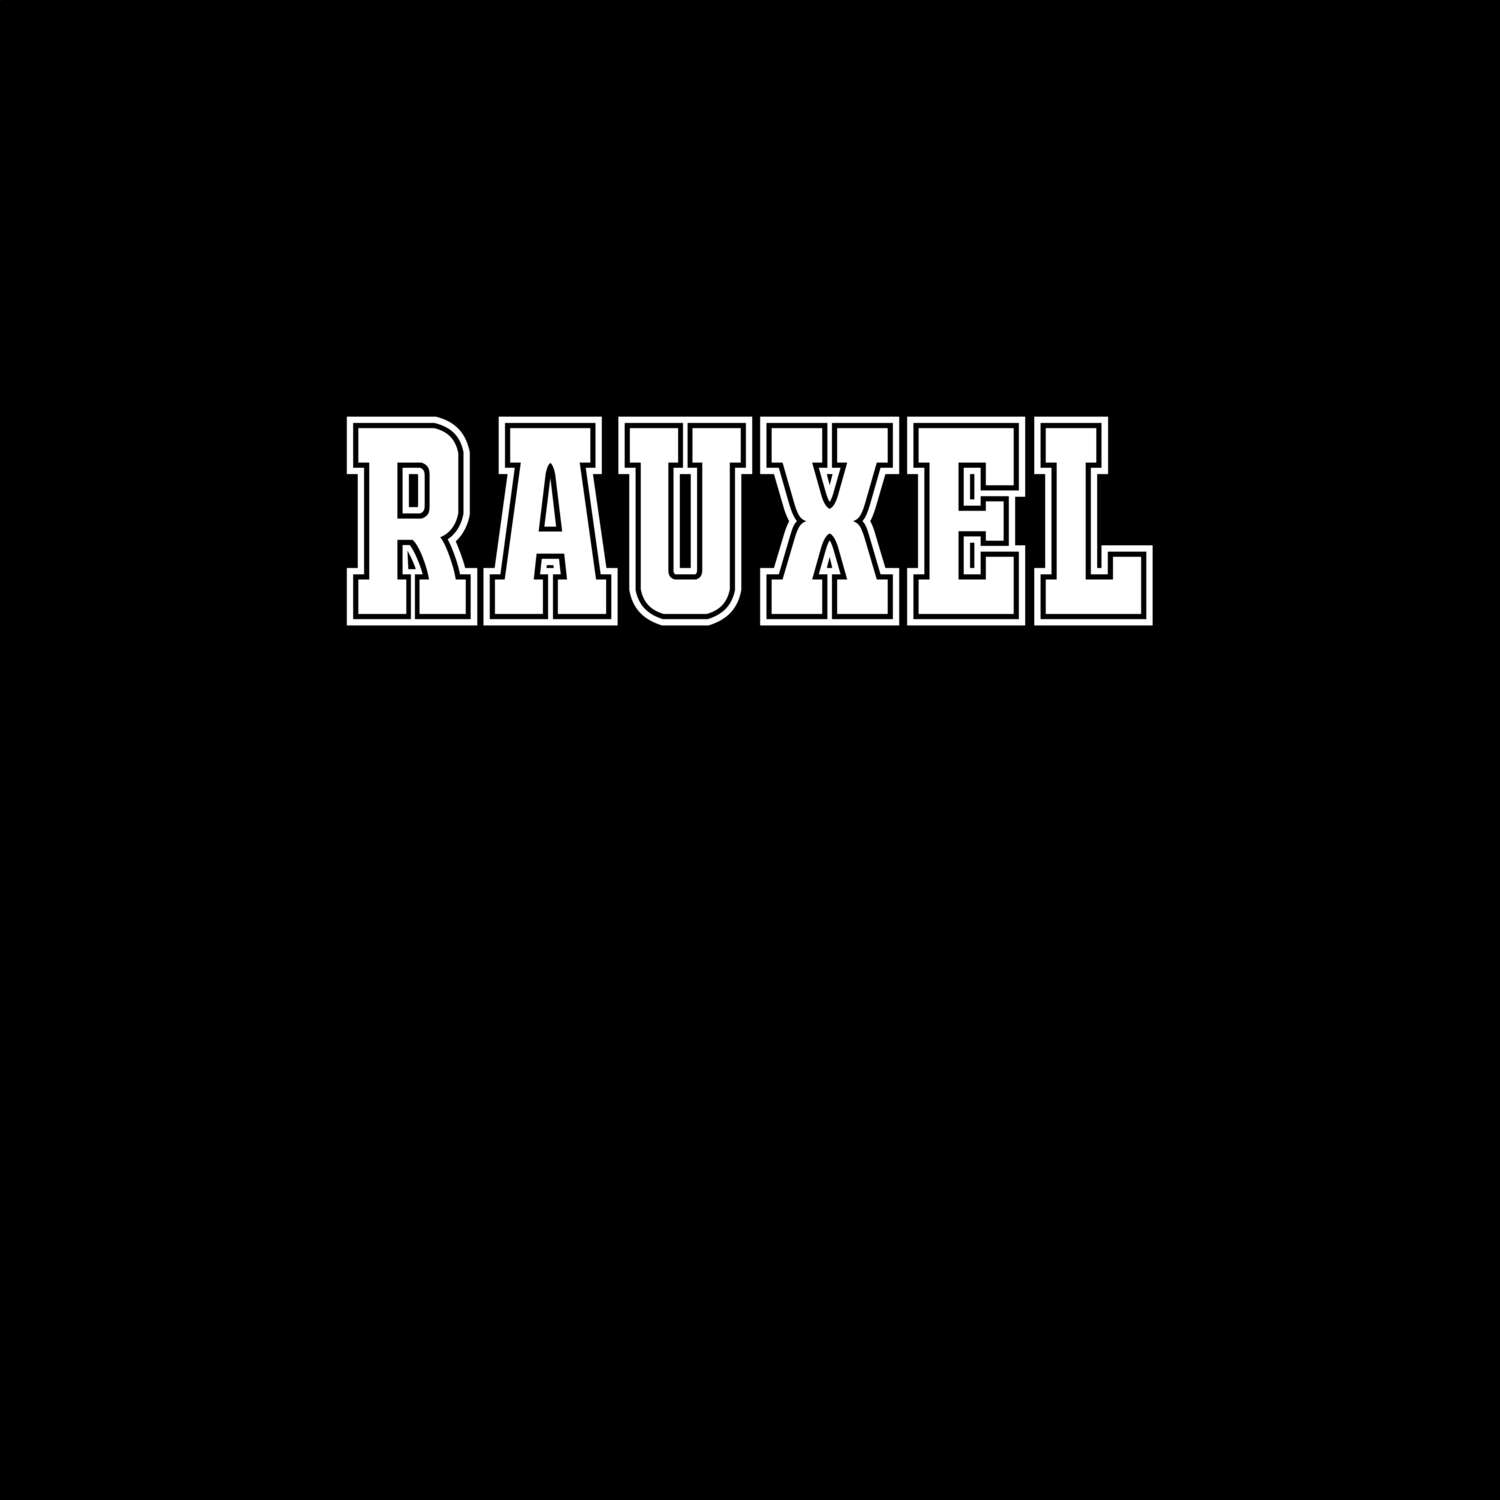 Rauxel T-Shirt »Classic«